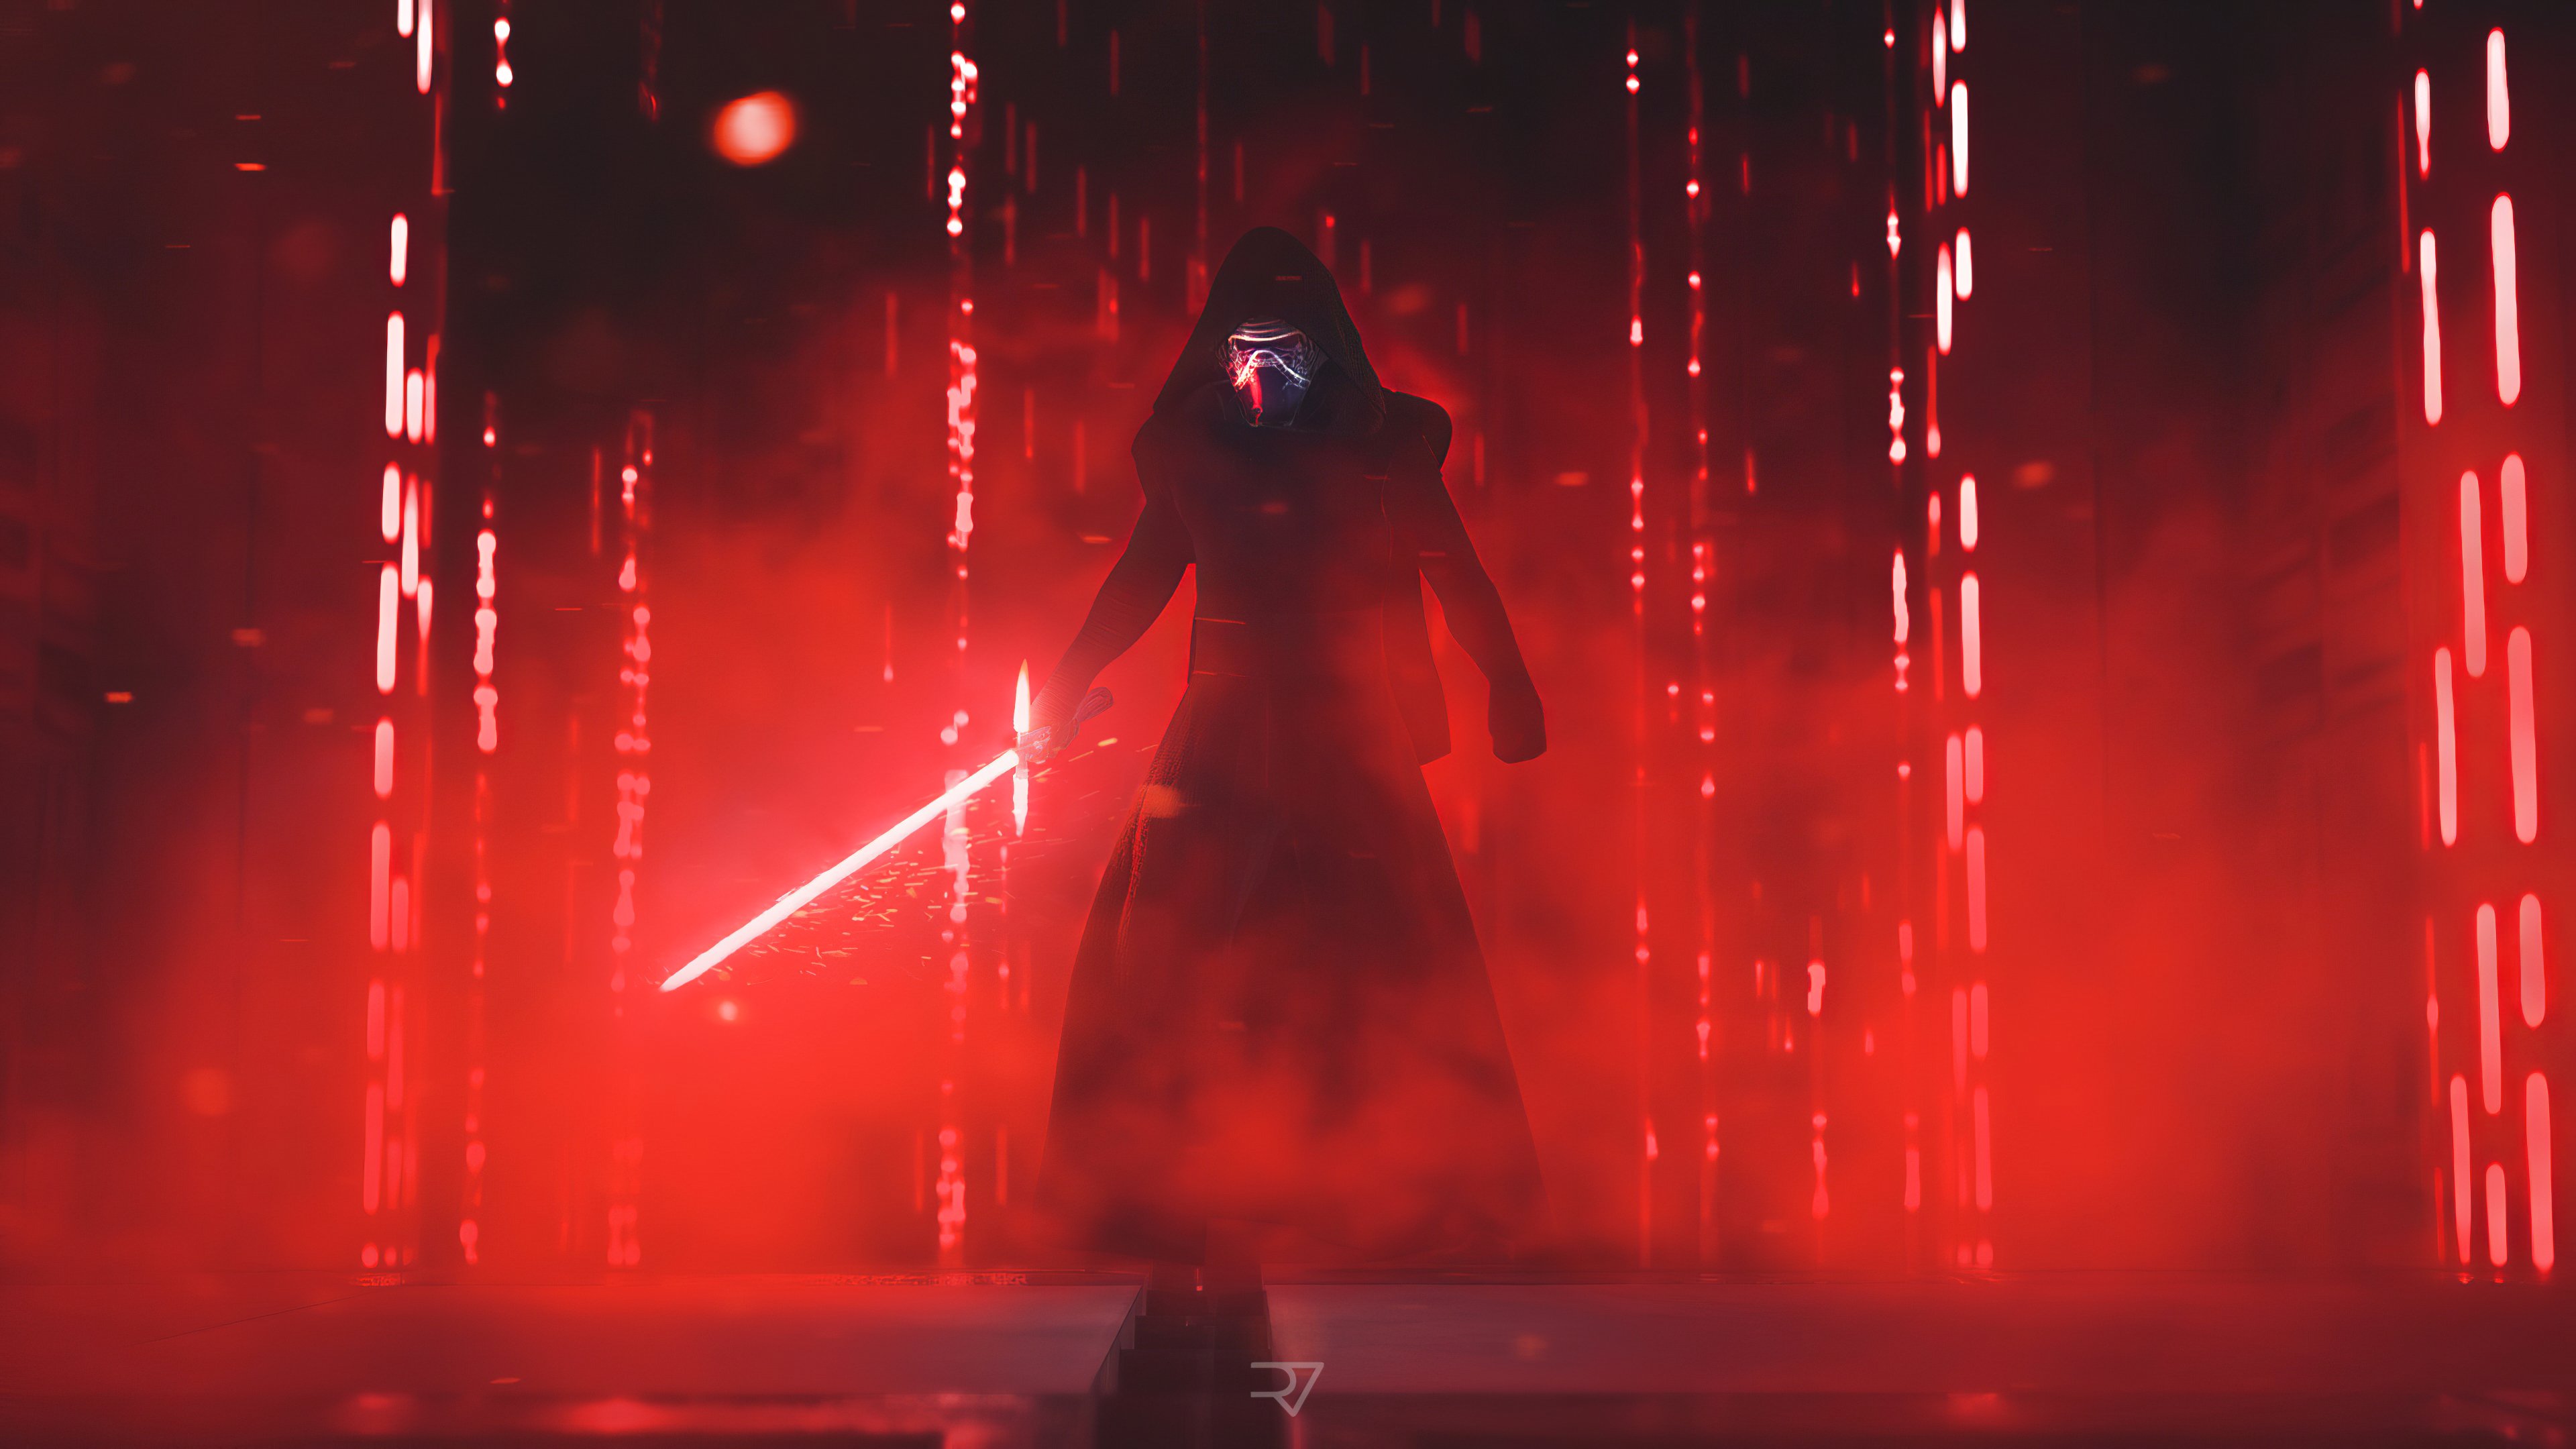 Darth Vader Desktop Wallpapers